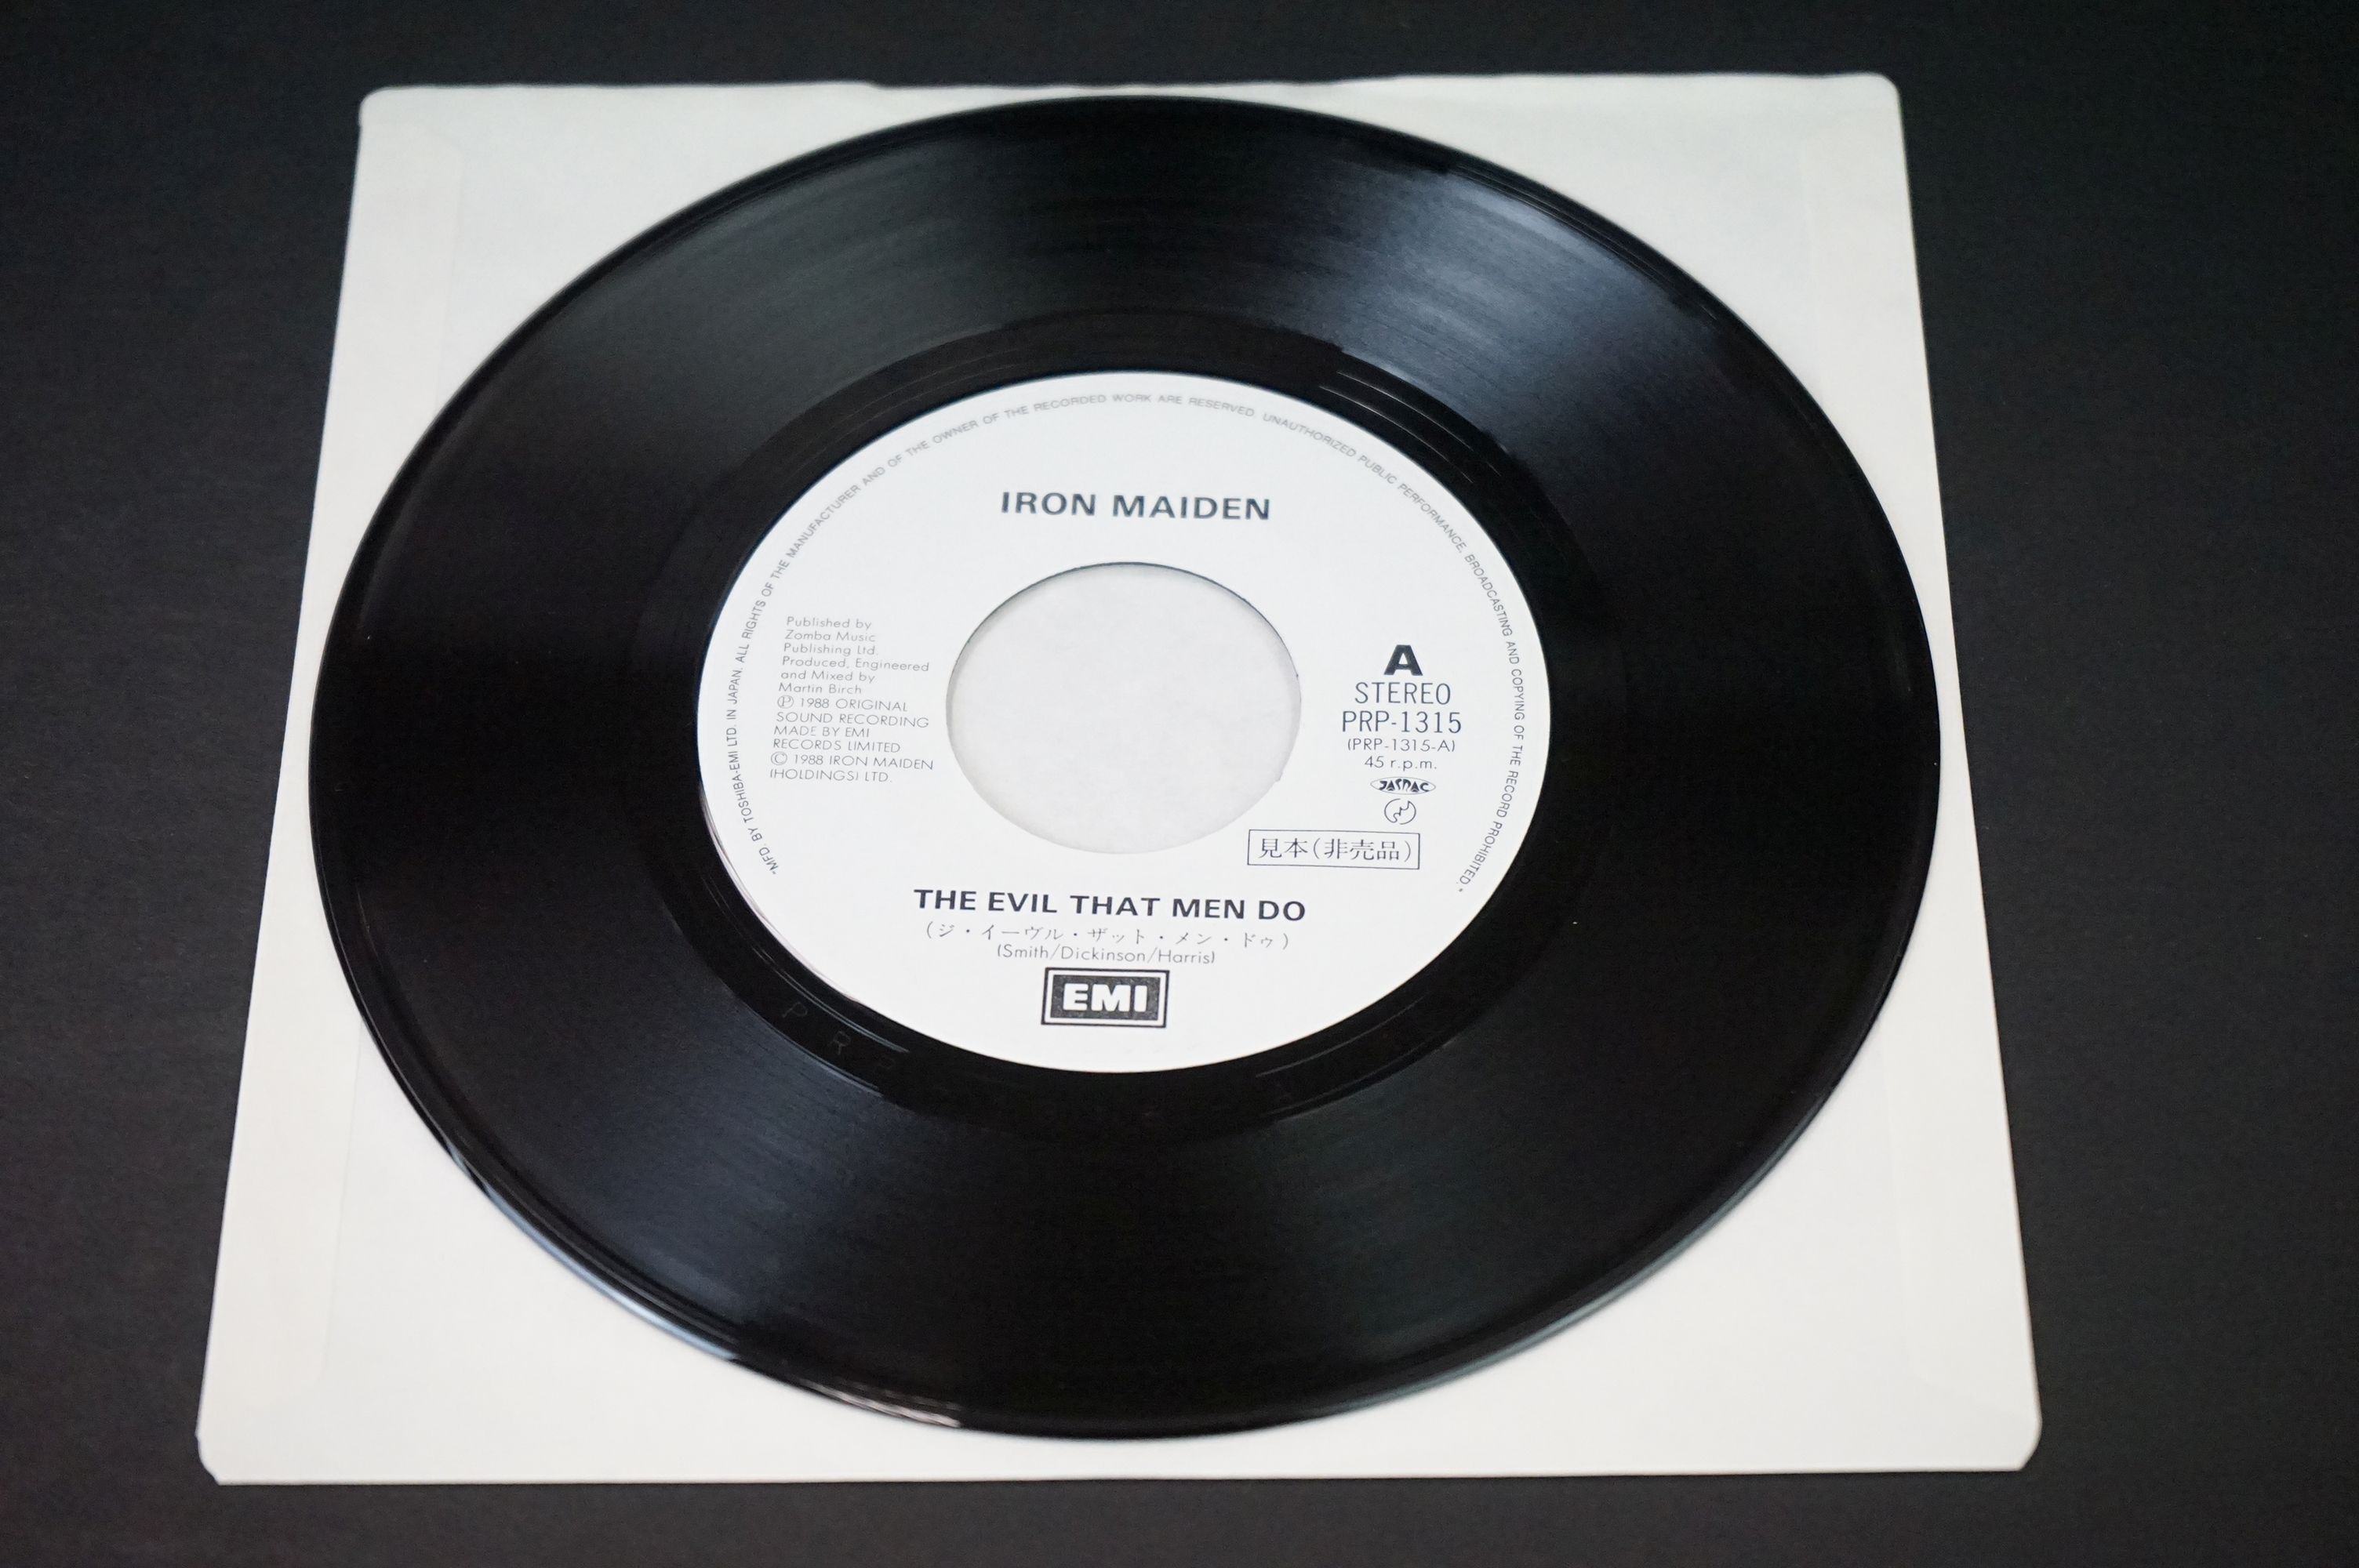 Vinyl - Iron Maiden The Evil That Men Do Japan only promo on EMI PRP-1315. NM - Image 2 of 7